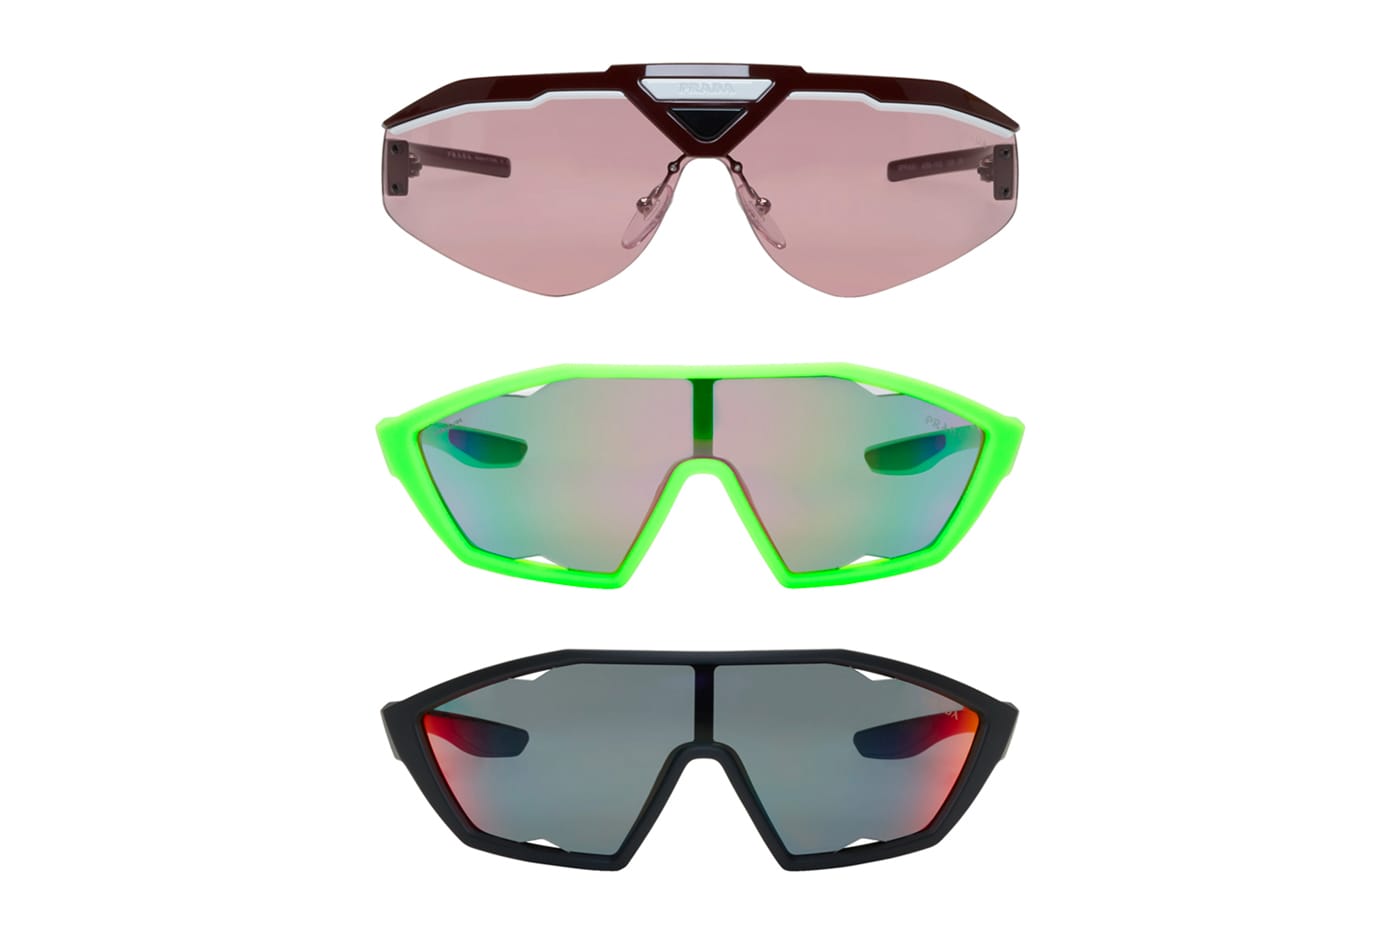 Prada FW19 Sunglasses Release Info 